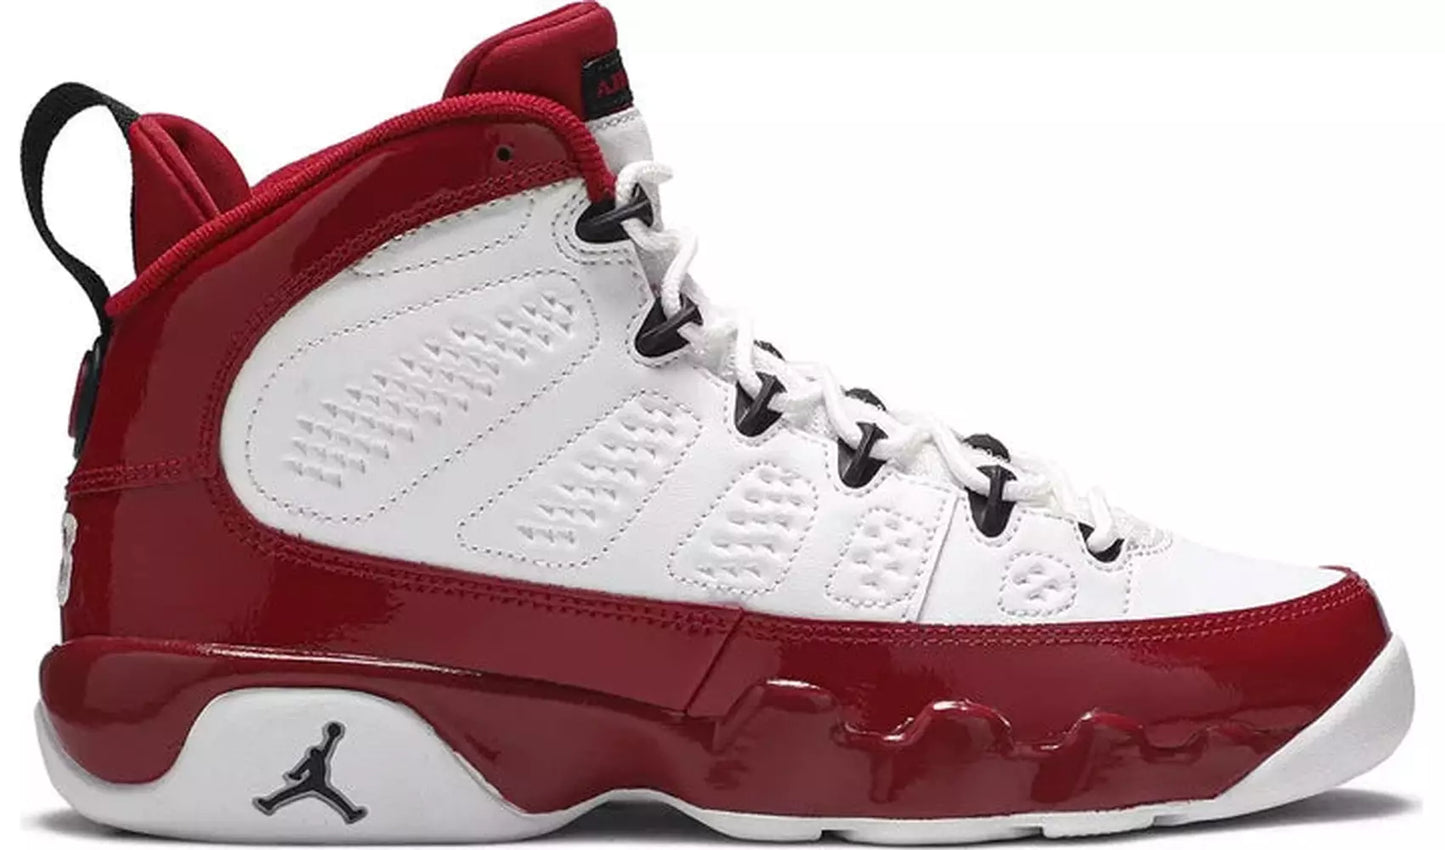 Jordan 9 Retro White Gym Red (GS)